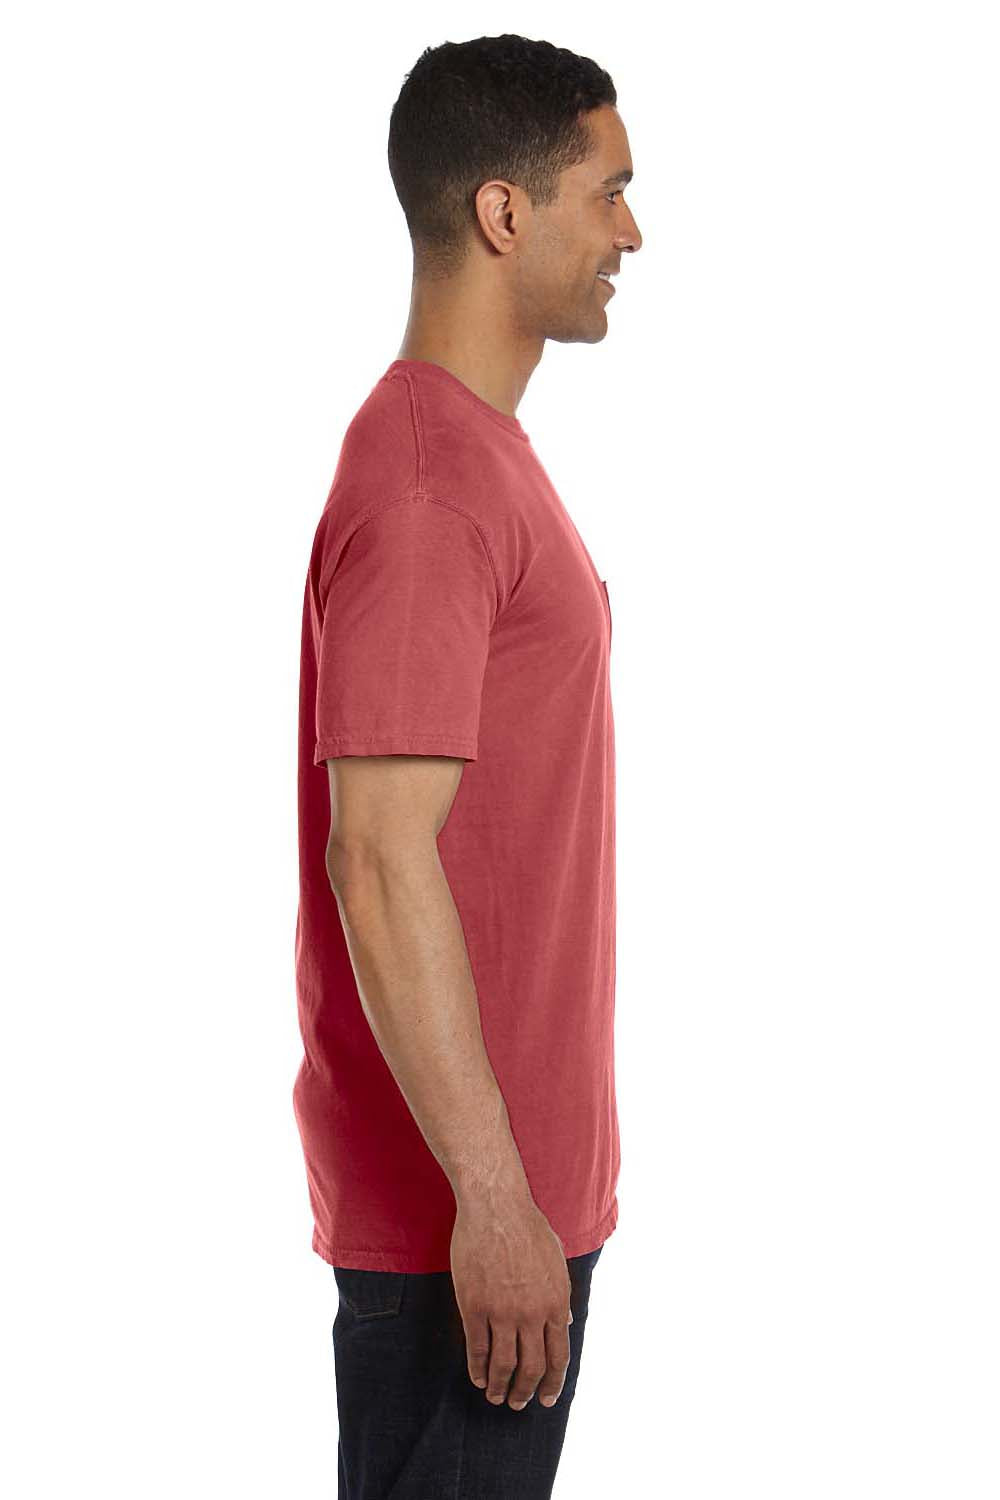 Comfort Colors 6030CC Mens Short Sleeve Crewneck T-Shirt w/ Pocket Crimson Red Side